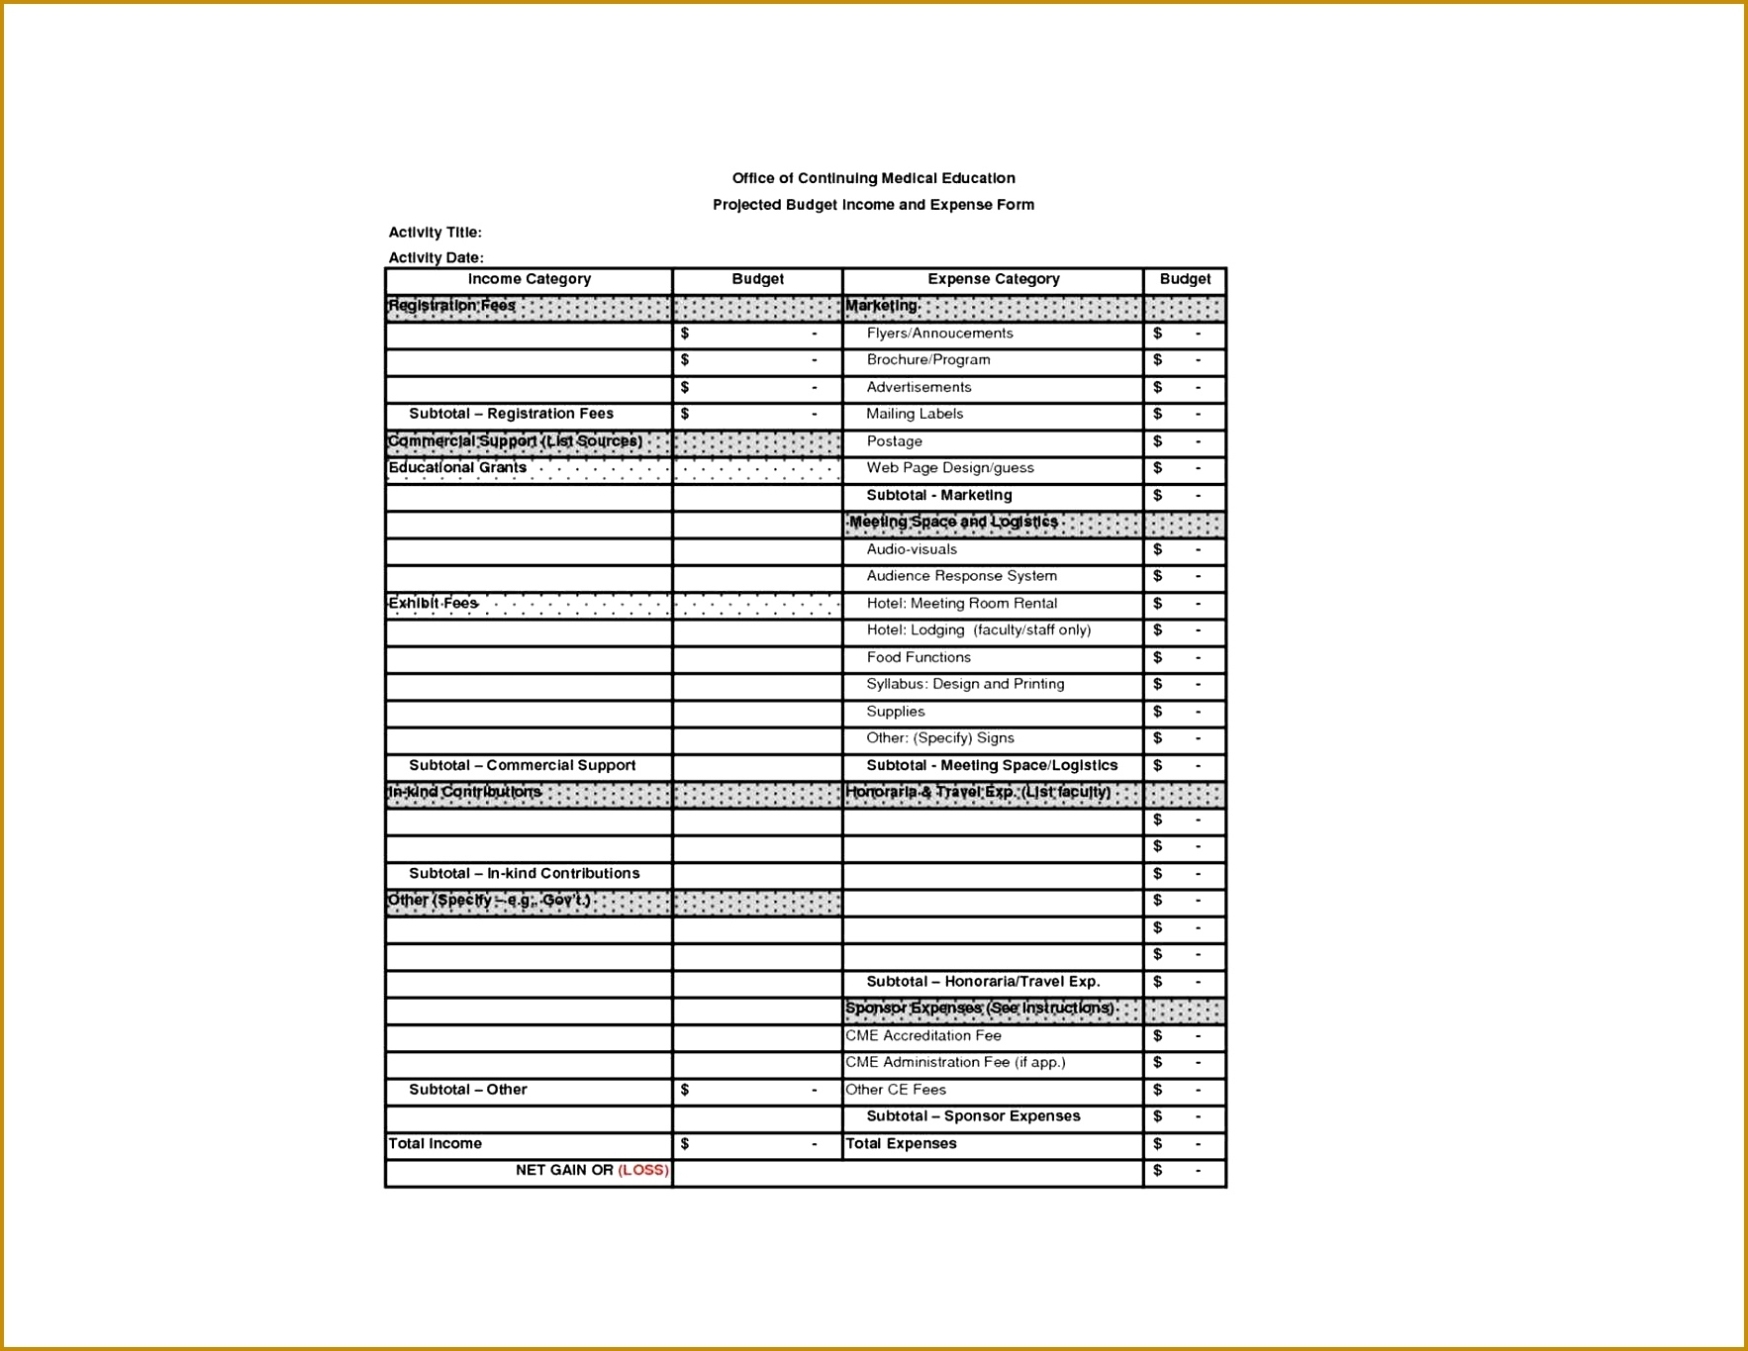 5 Small Business Balance Sheet Template Excel | Fabtemplatez Within Balance Sheet Template For Small Business